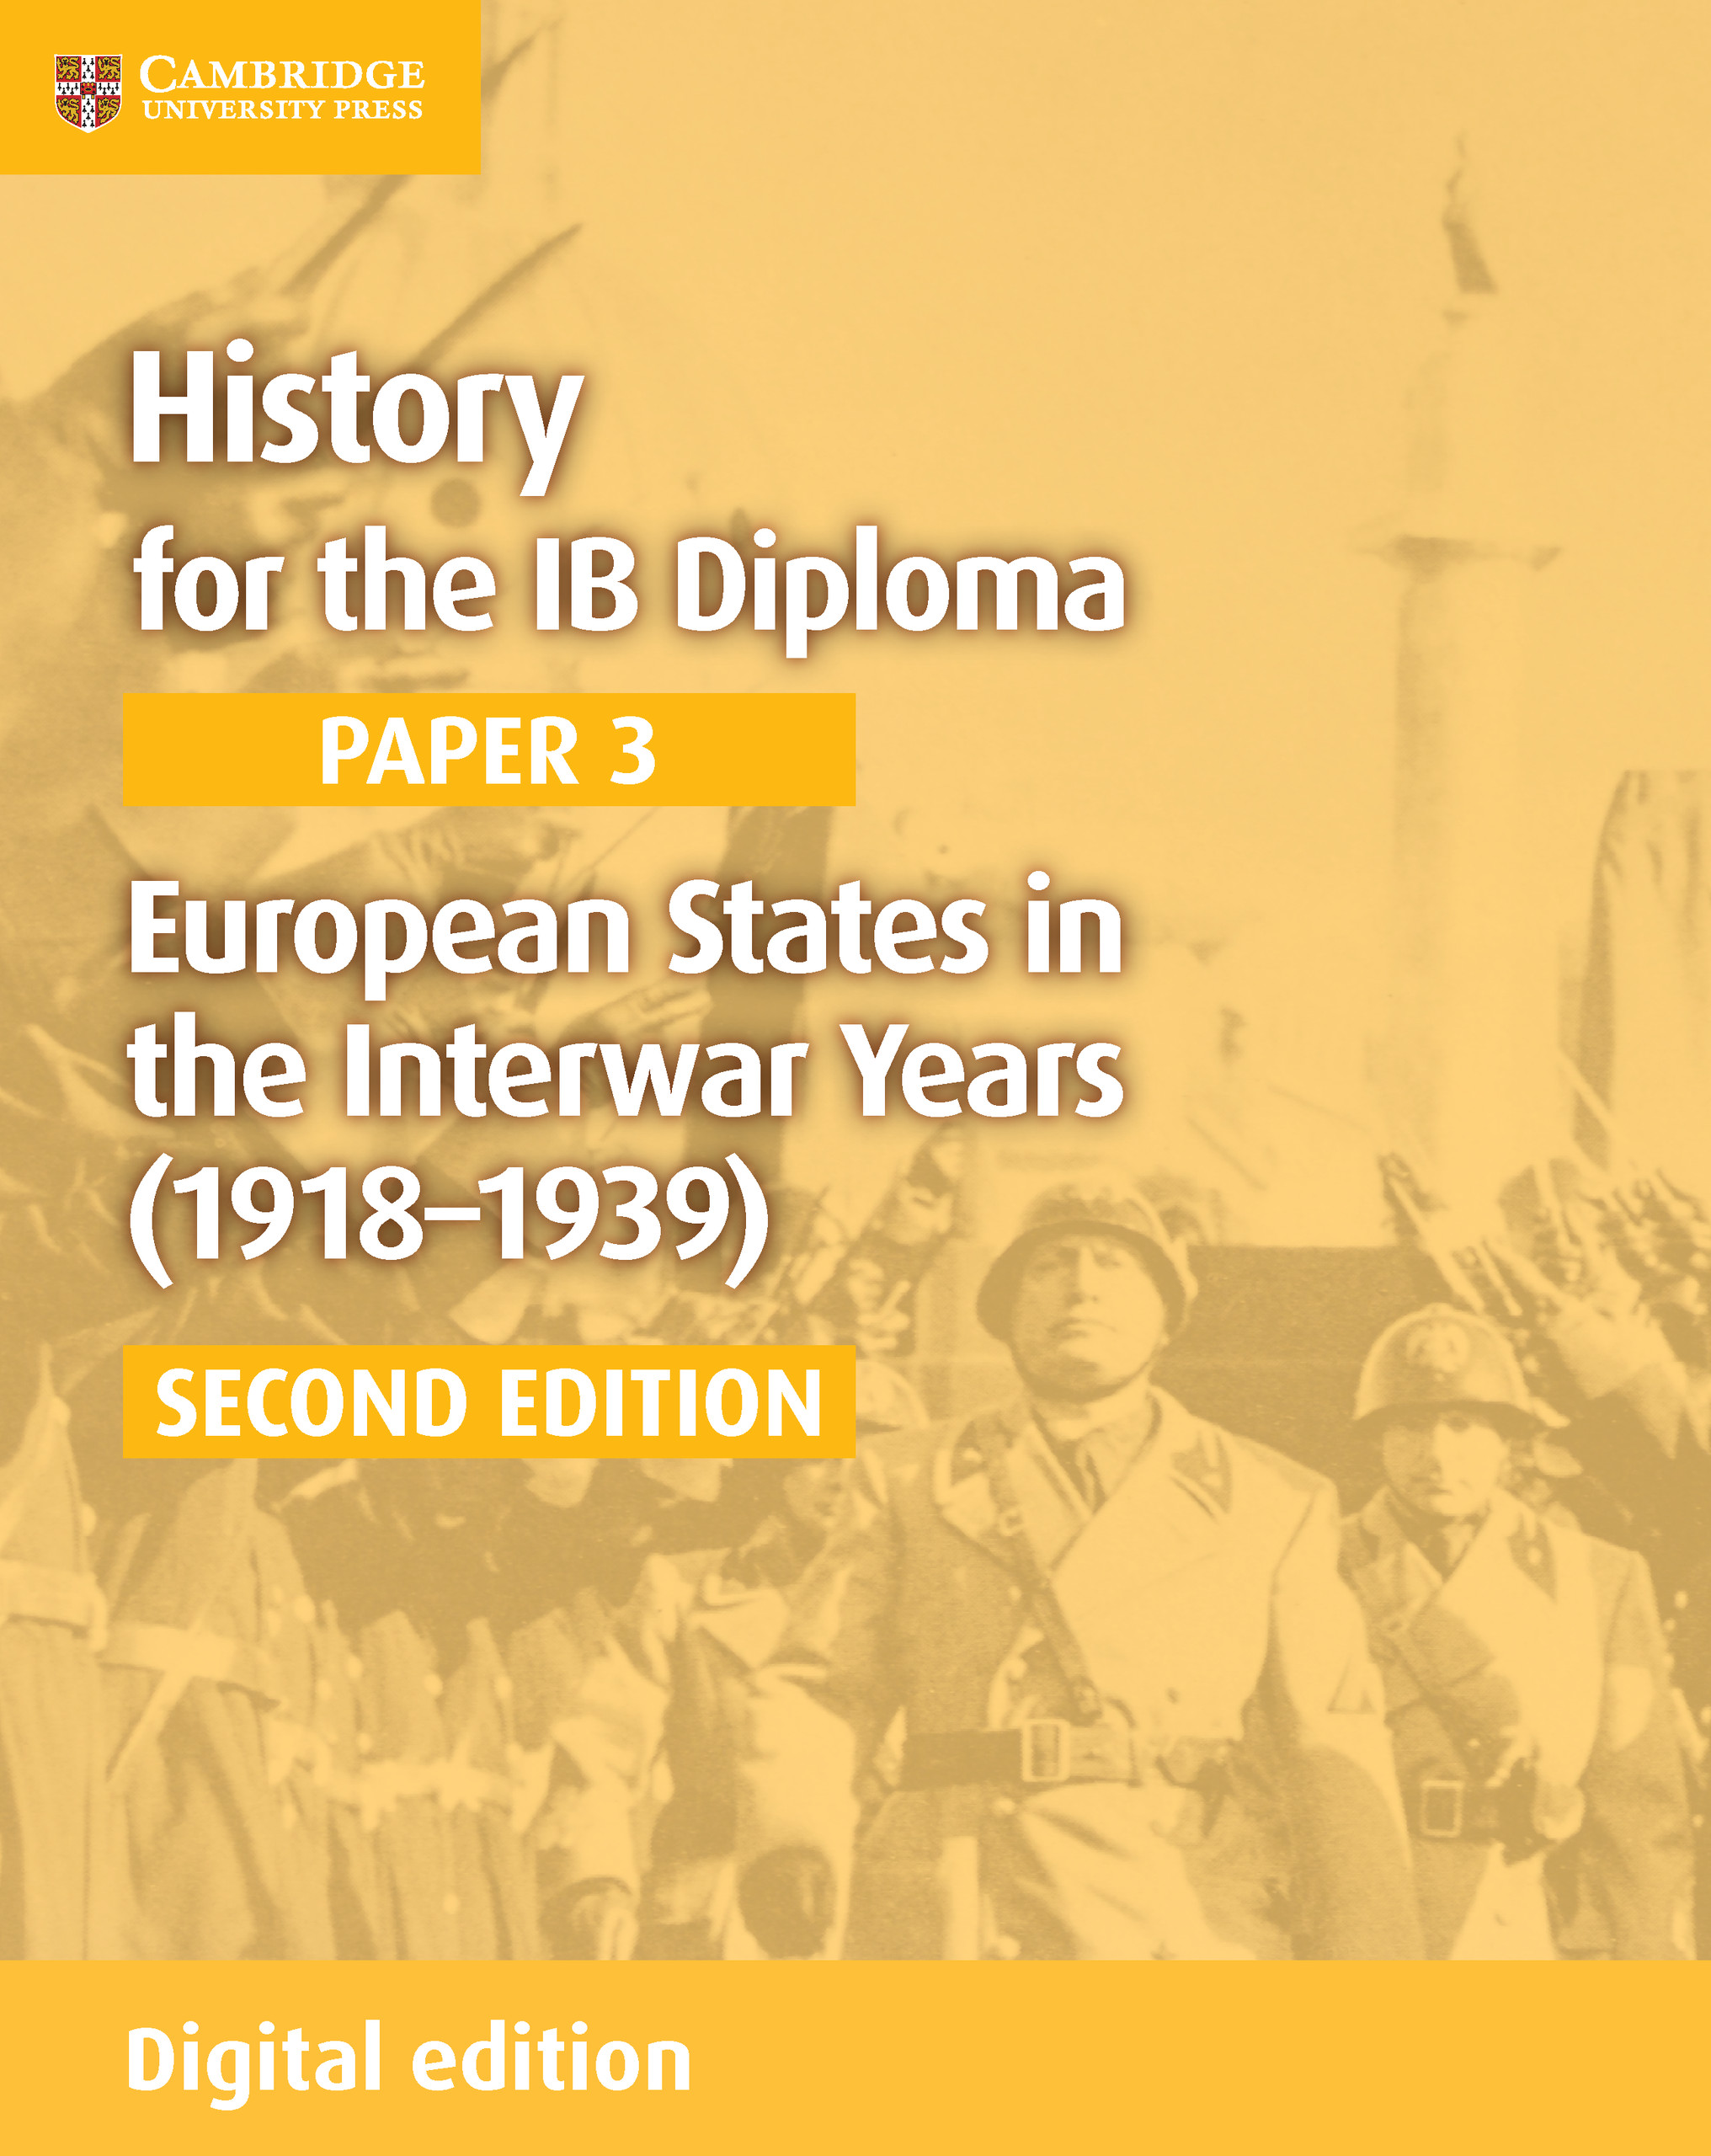 IB History Paper 3: European States in the Interwar Years